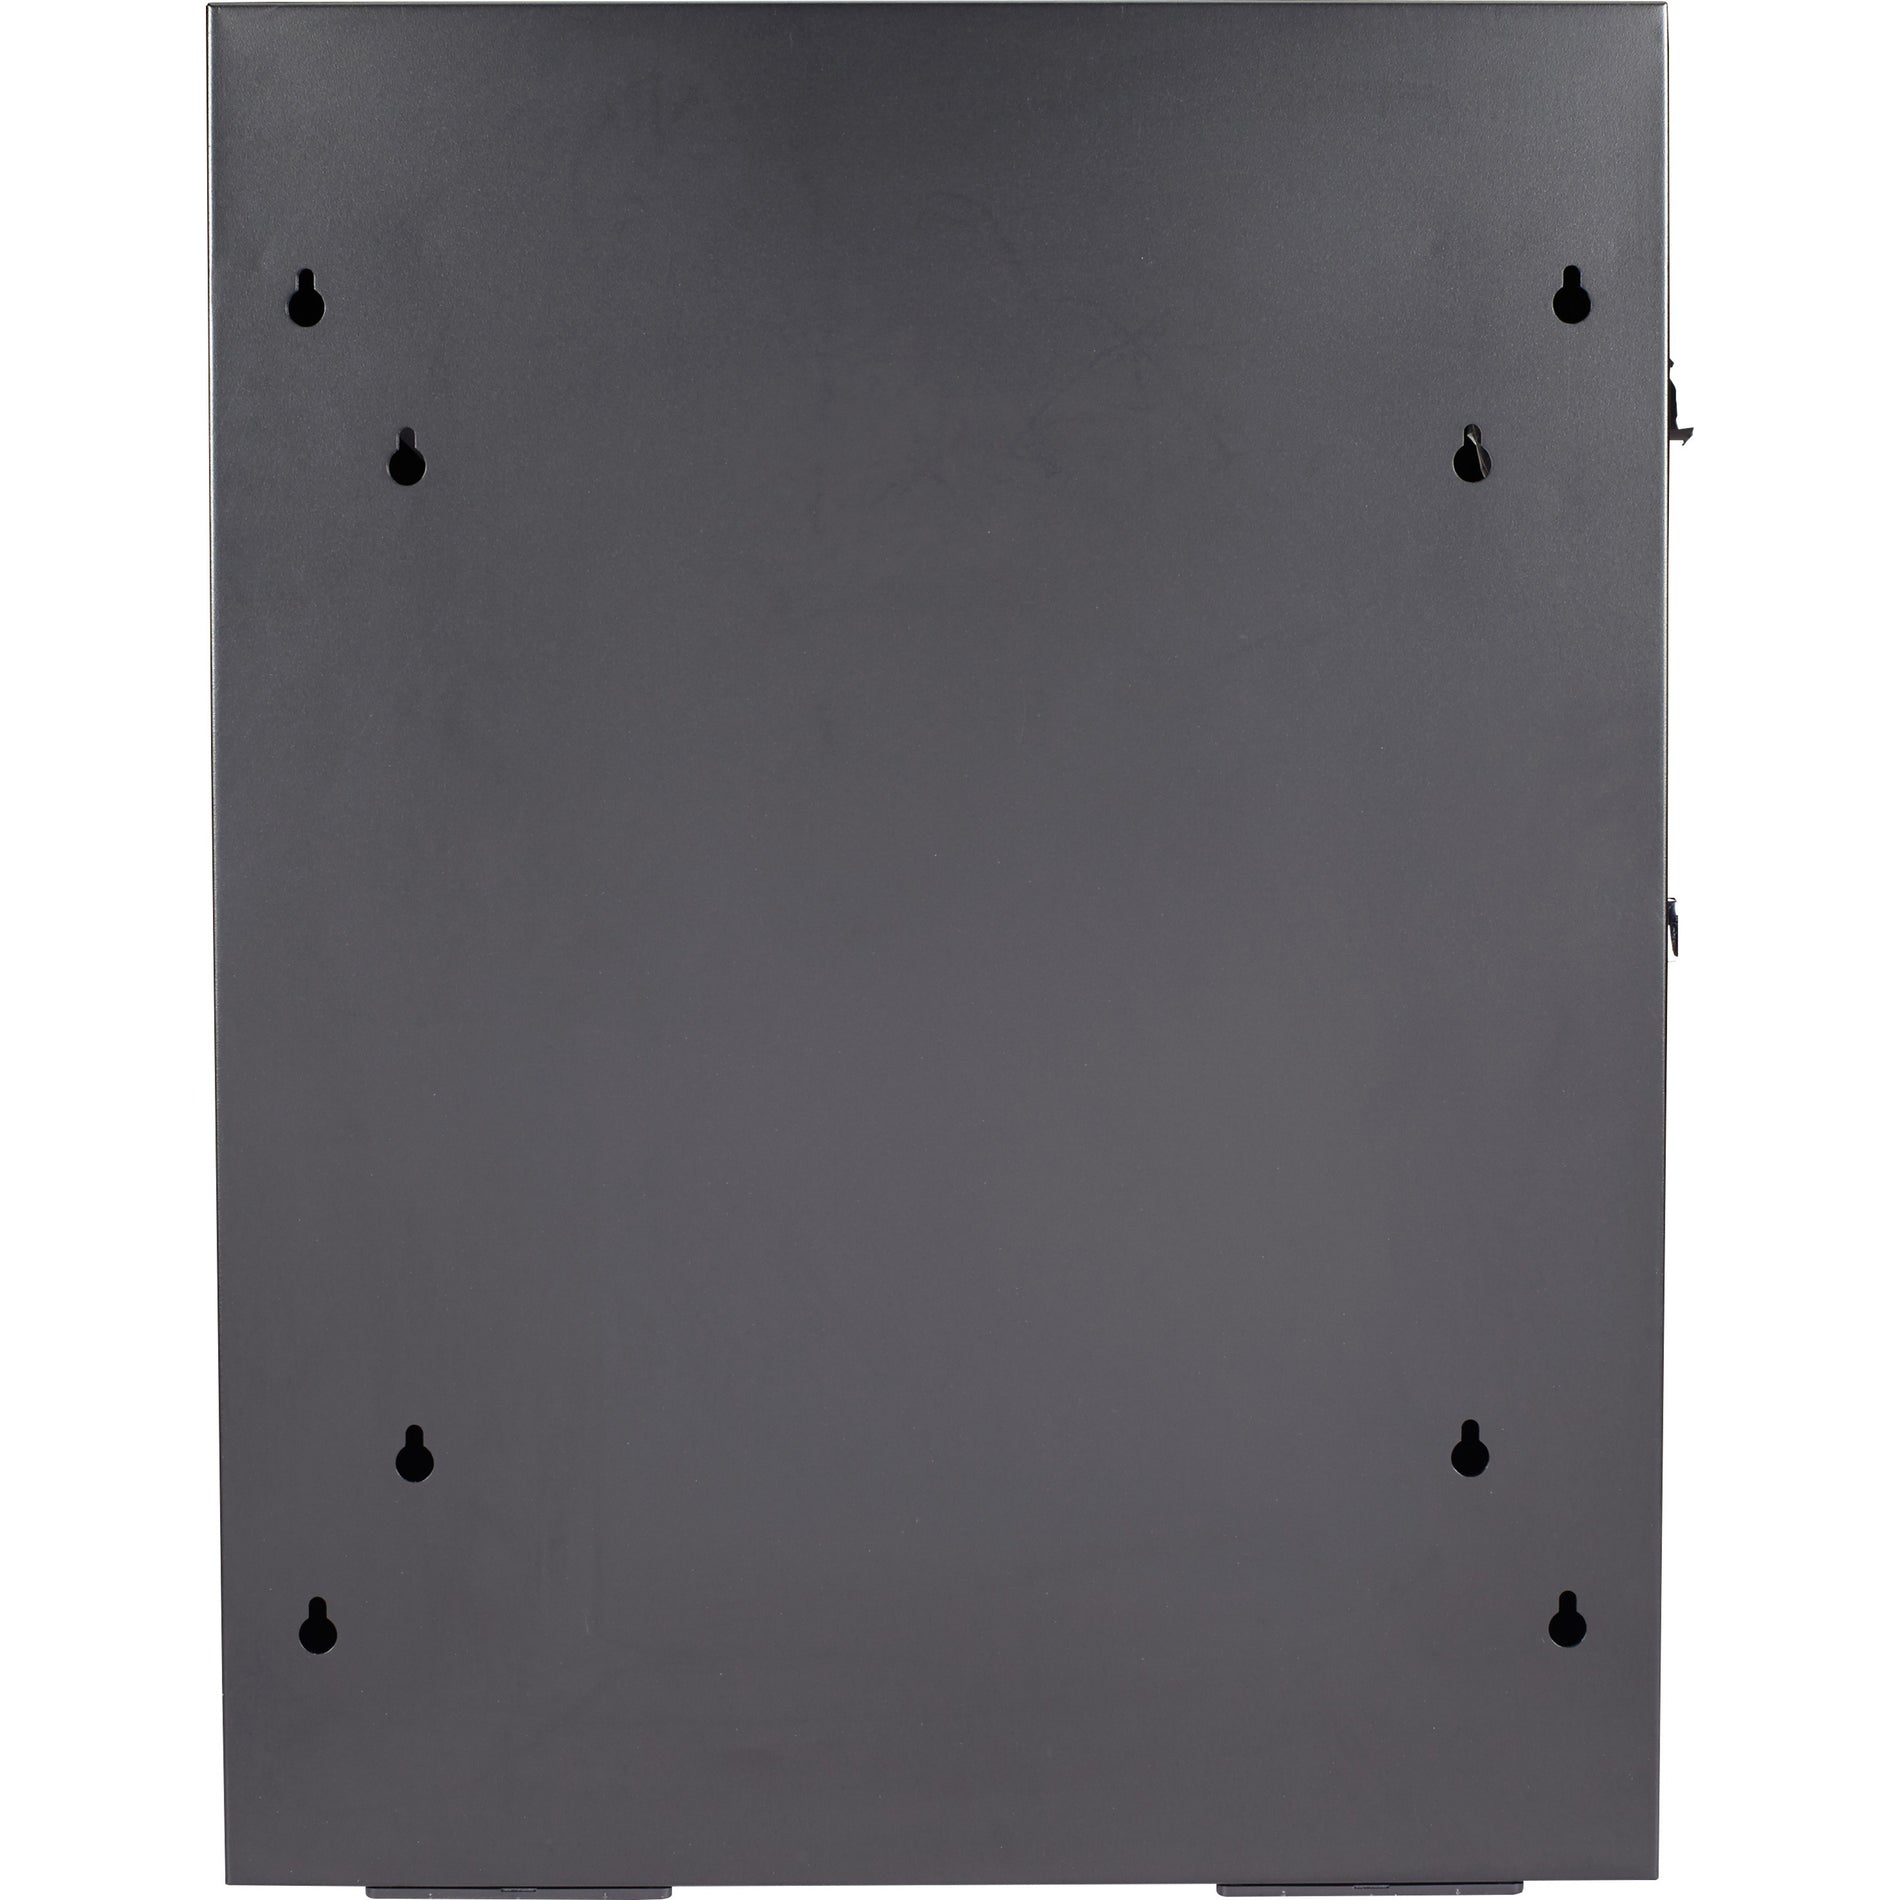 Black Box RMT351A Low-Profile Vertical Wallmount Cabinet - 2U, 24" D Equipment, TAA Compliant, Taiwan Origin